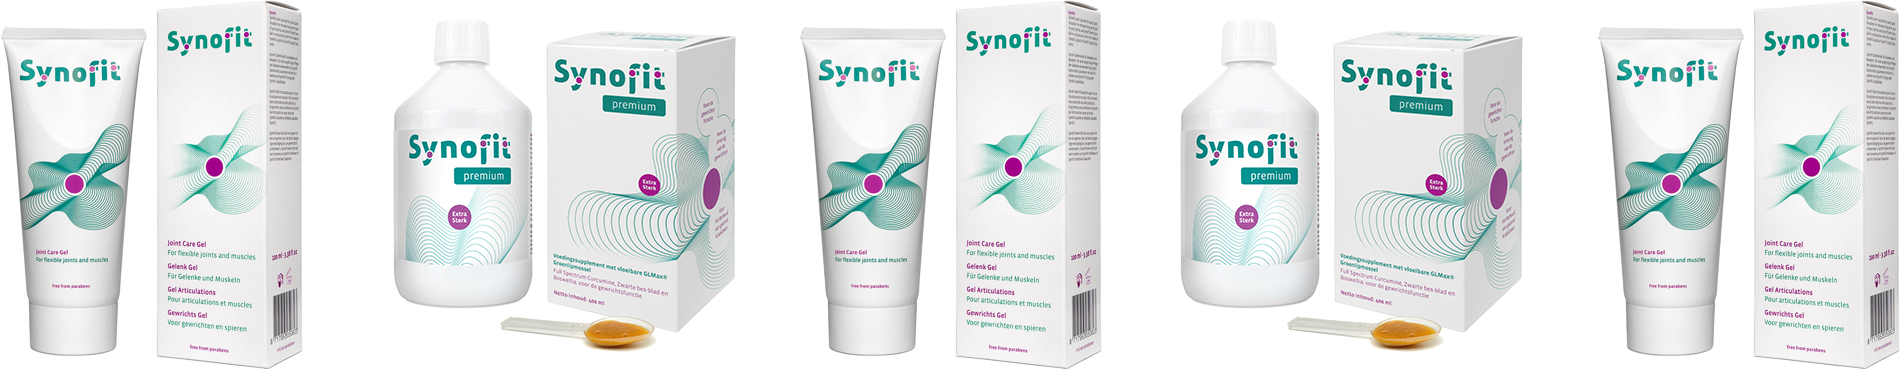 Banner-Synofit-produkte